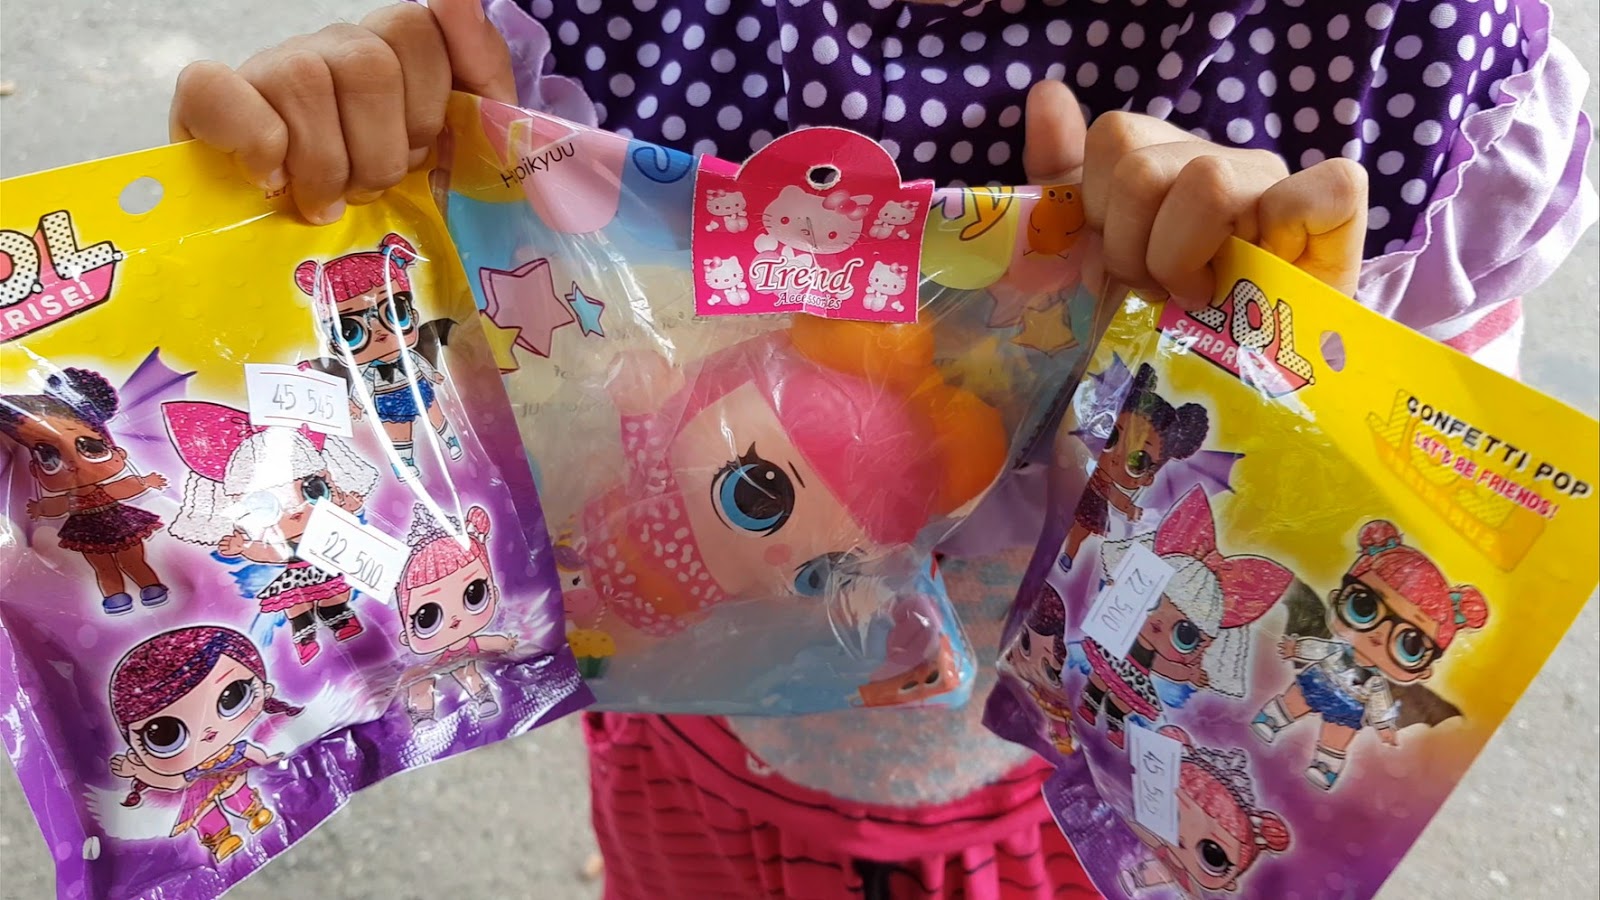 100K Dapat 3 Mainan Anak Murah Meriah, Hunting Squishy & Lol Surprise Blind Bag Confetti Pop